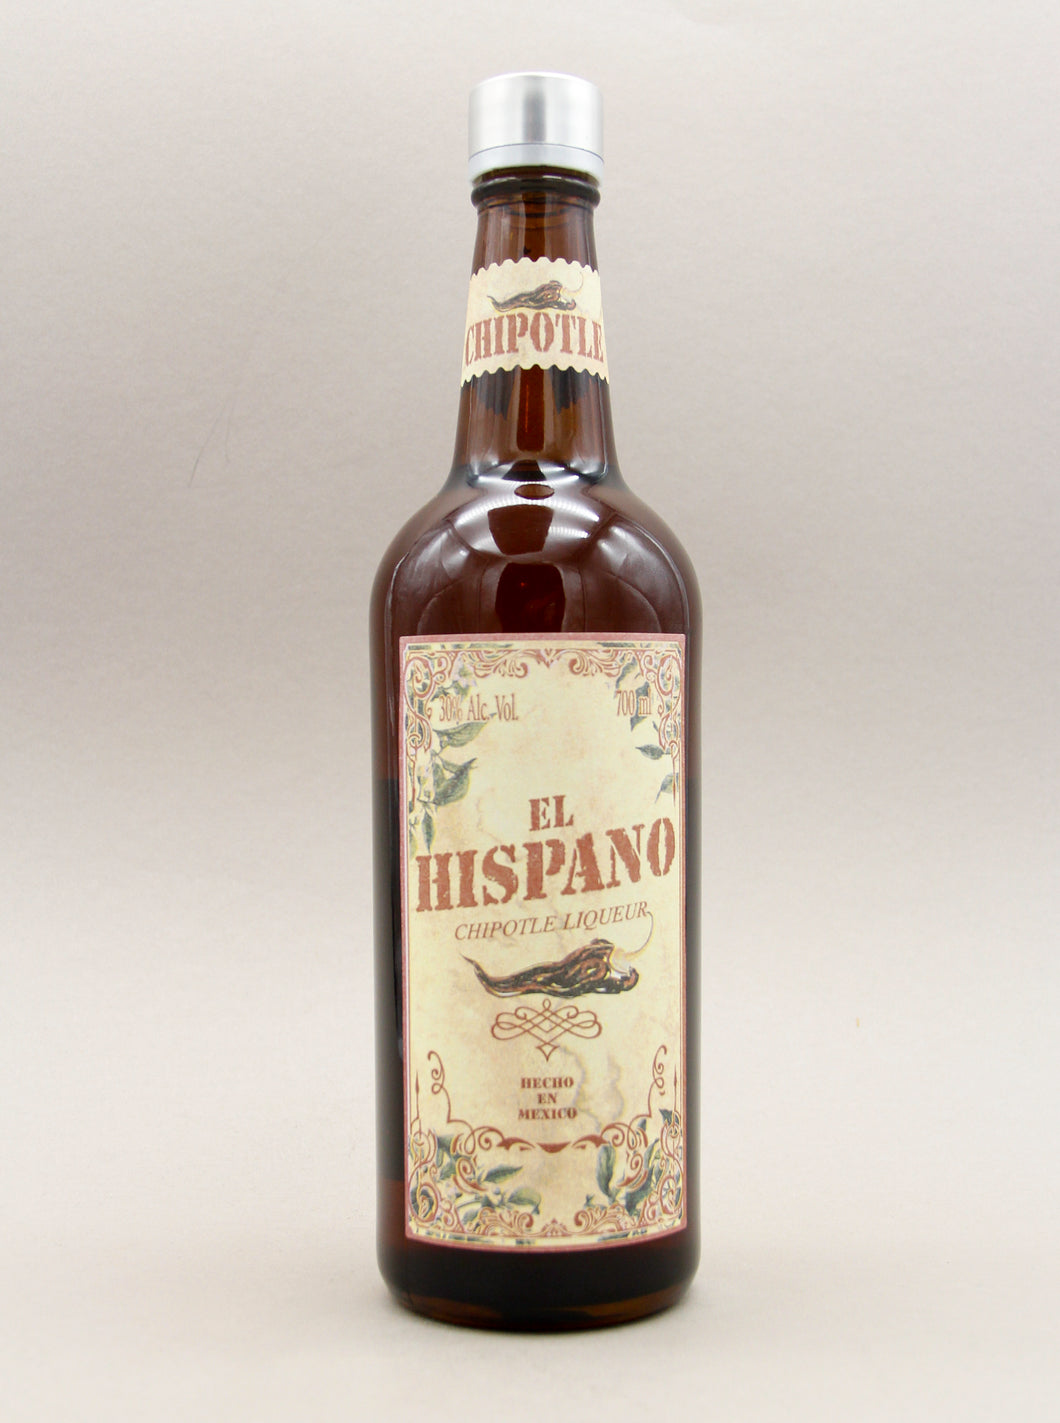 El Hispano, Chipotle Liquor, Mexico (30%, 70cl)